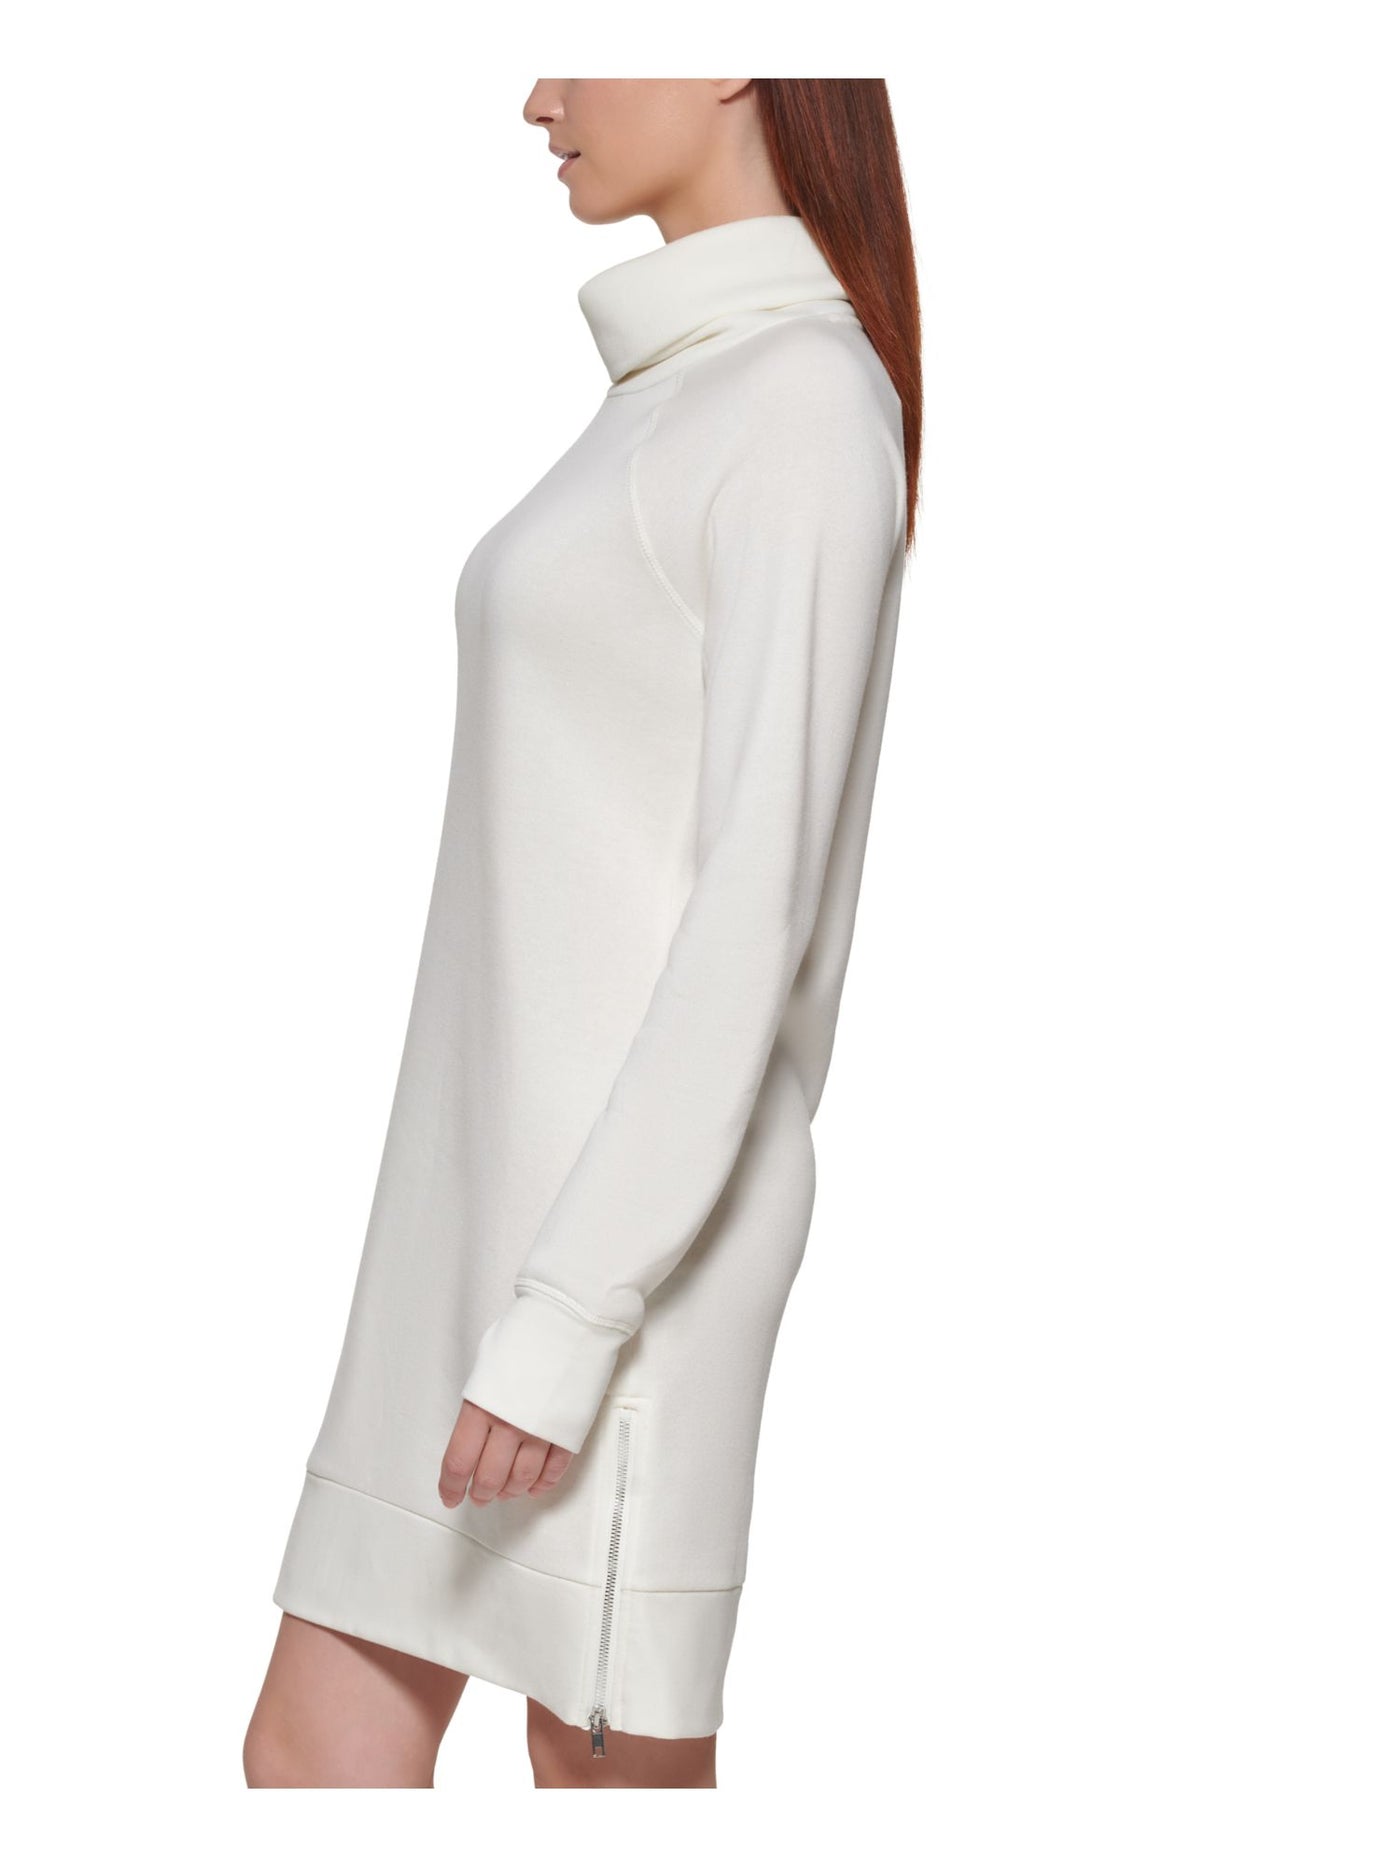 MNY MARC NEW YORK PERFORMANCE Womens Ivory Stretch Zippered Sweatshirt Long Sleeve Turtle Neck Short Sweatshirt Dress M